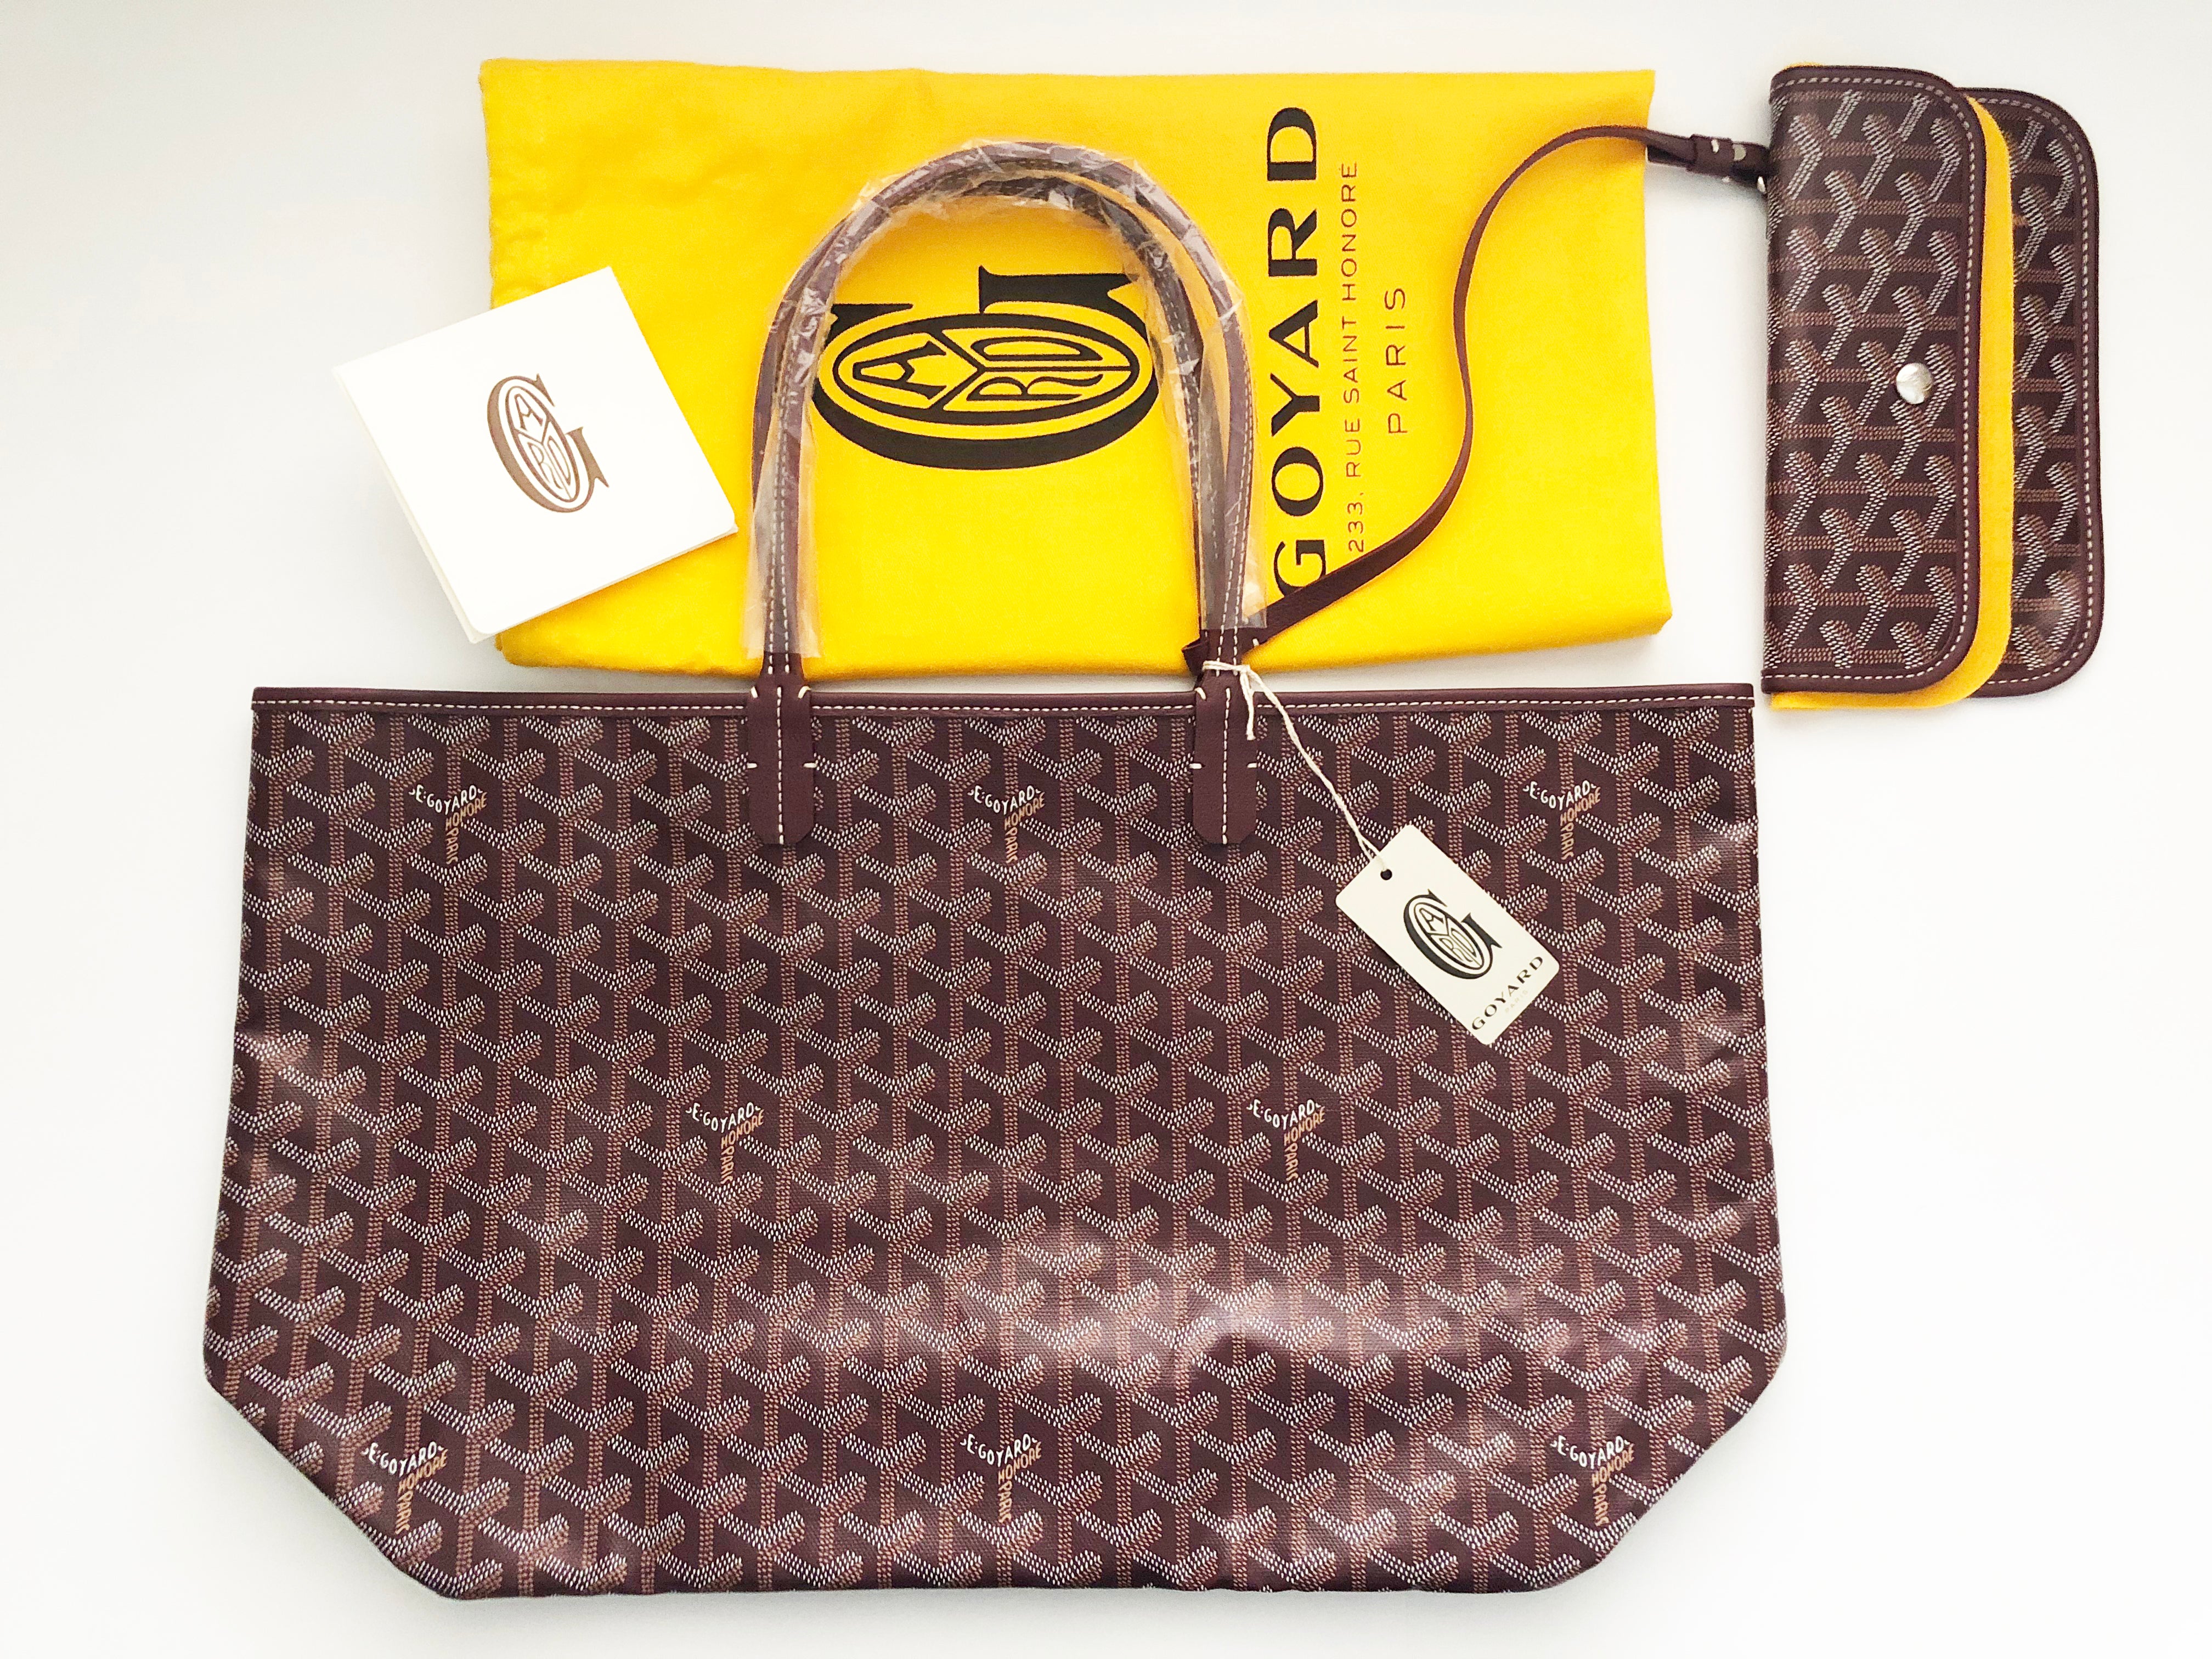 Goyard, Bags, Gorgeous Authentic Goyard Pm Burgundy Tote